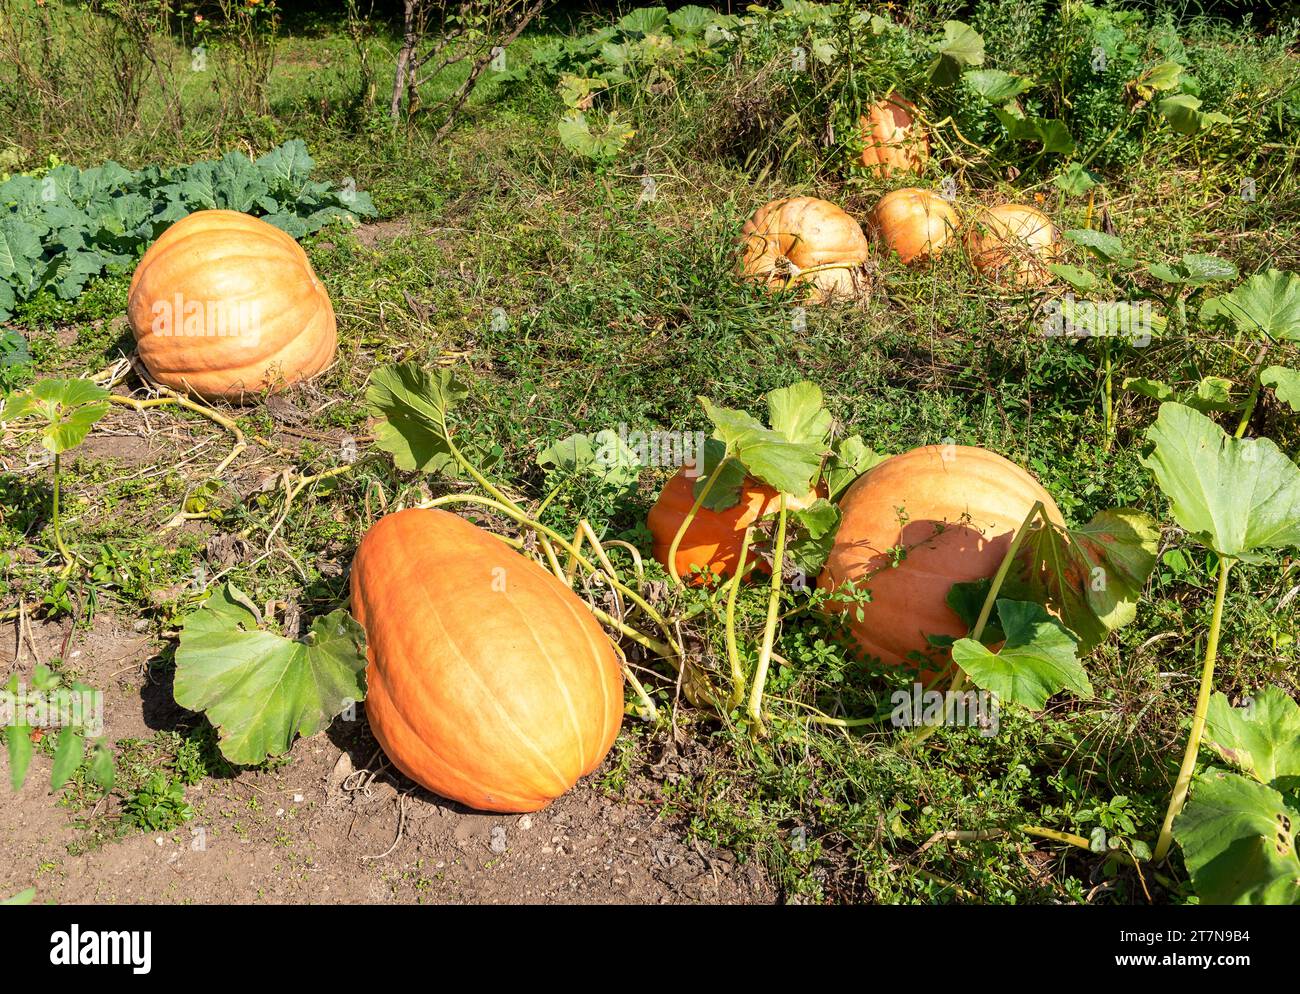 Big Orange pumpkins in the garden on the soil. Stock Photo